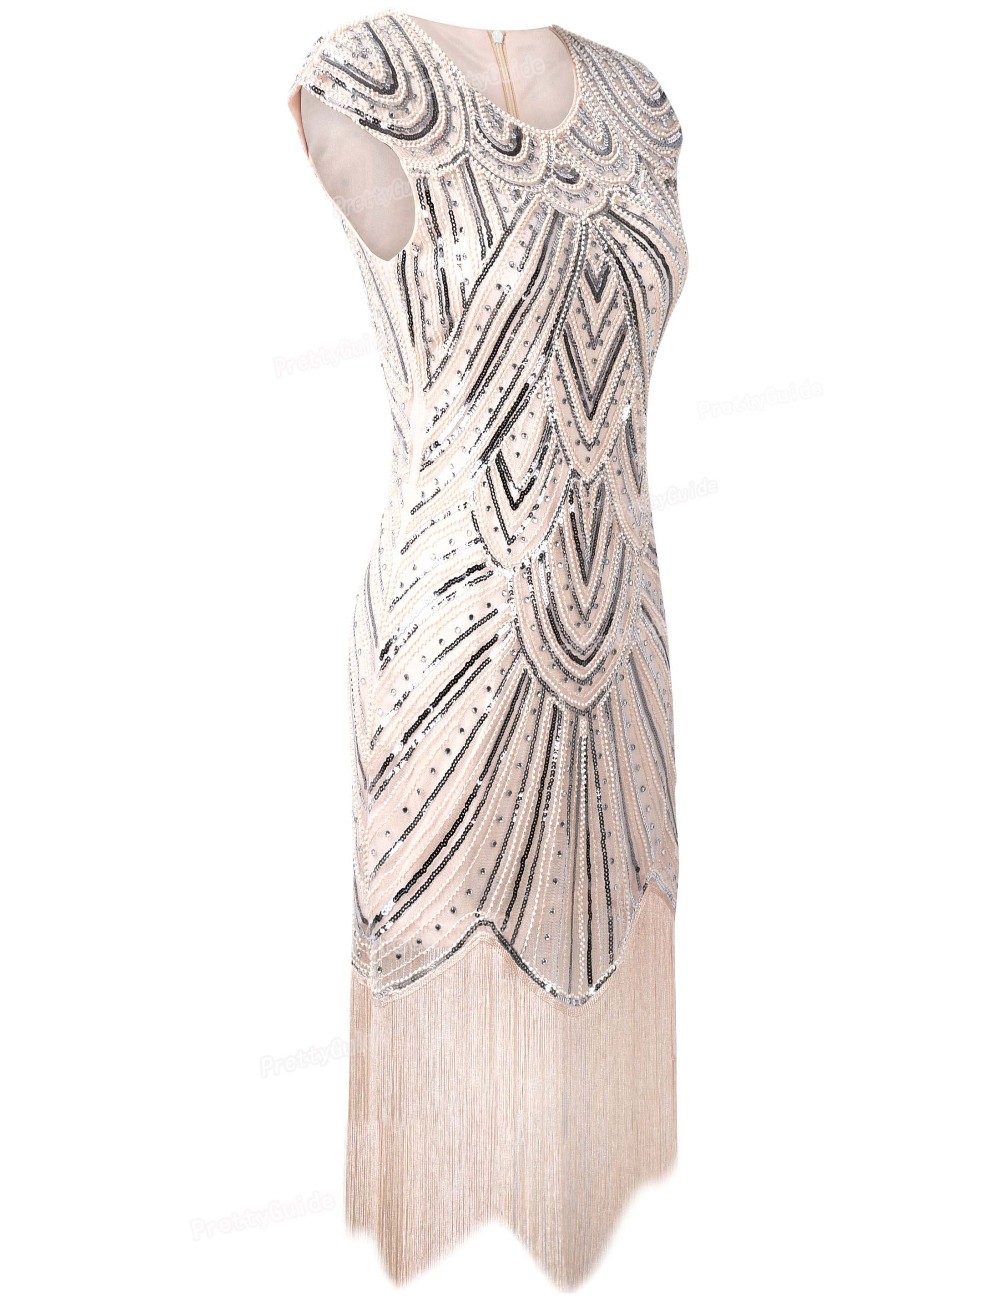 Vintage-Inspired-1920s-Gastby-Handmade-Diamond-Sequined-Embellished-Fringed-Flapper-Party-Dress-32564560310